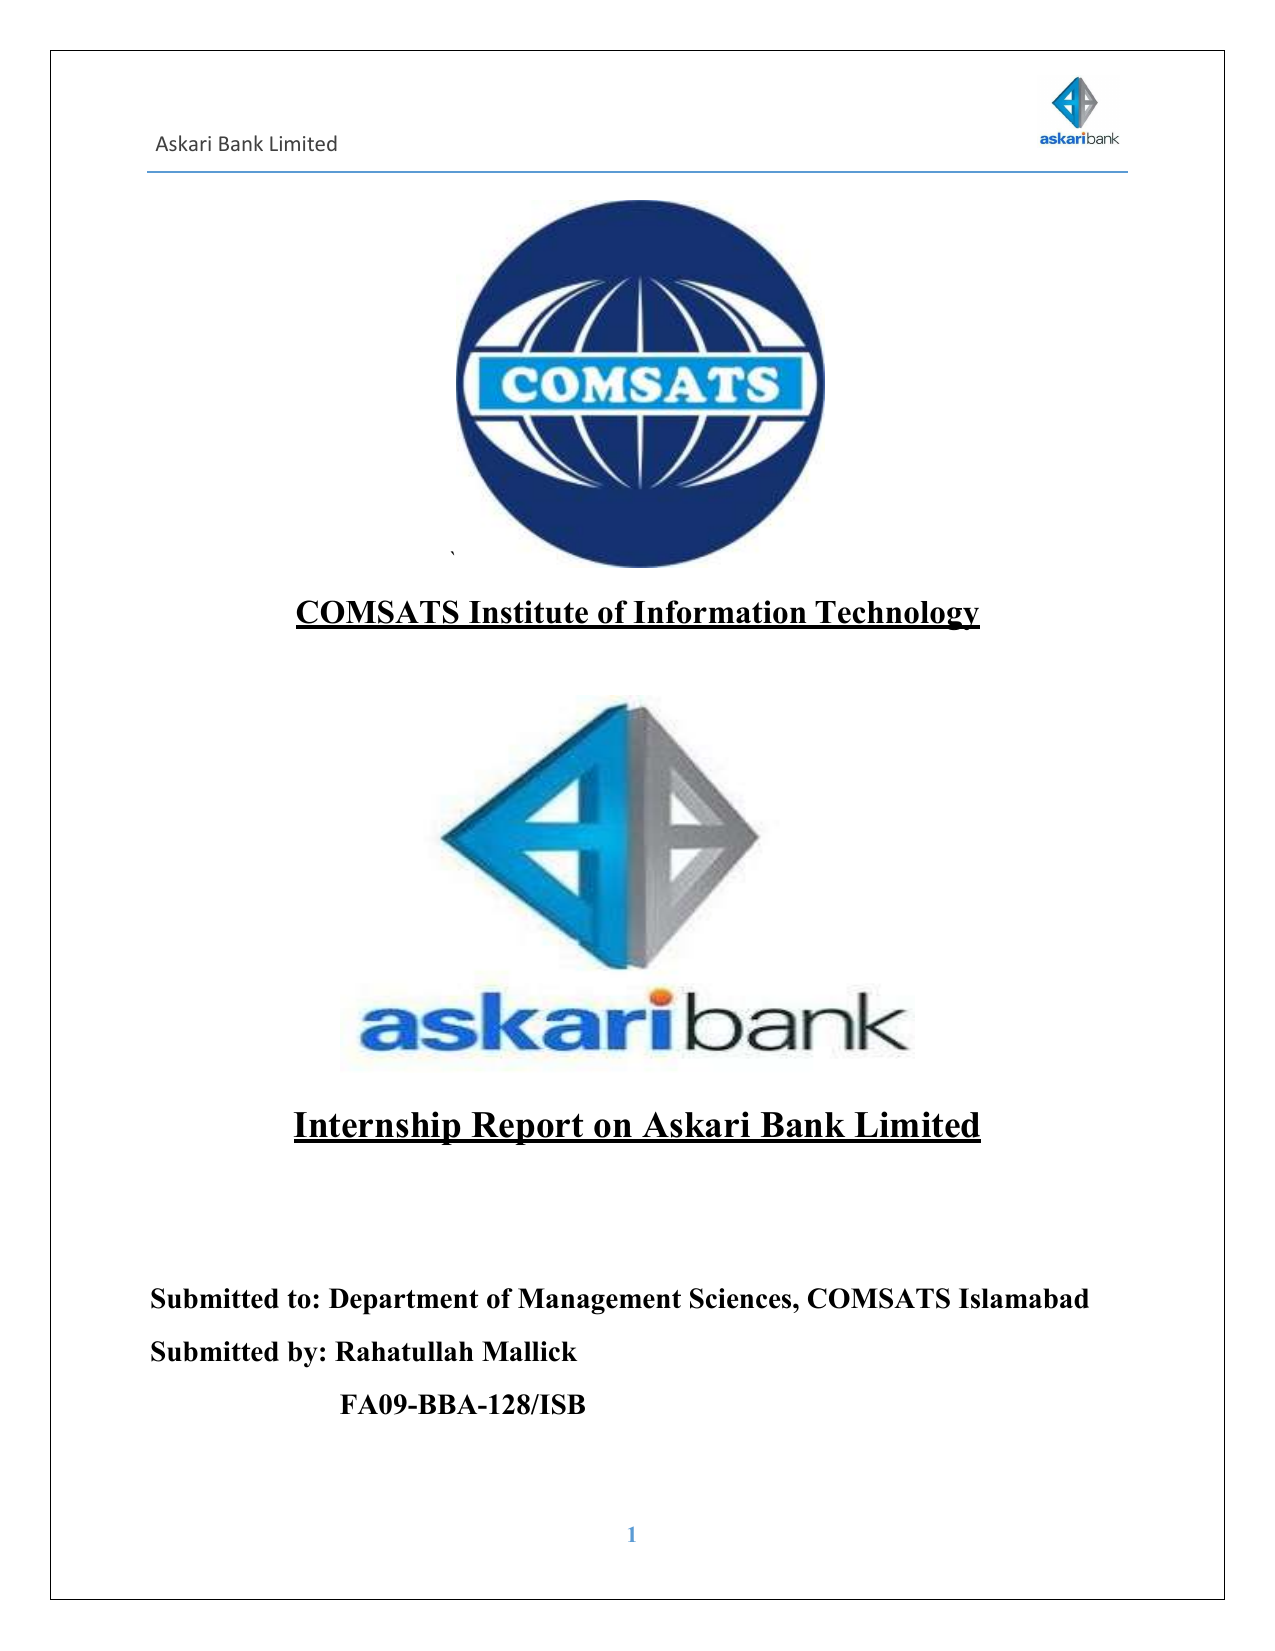 askari bank internship